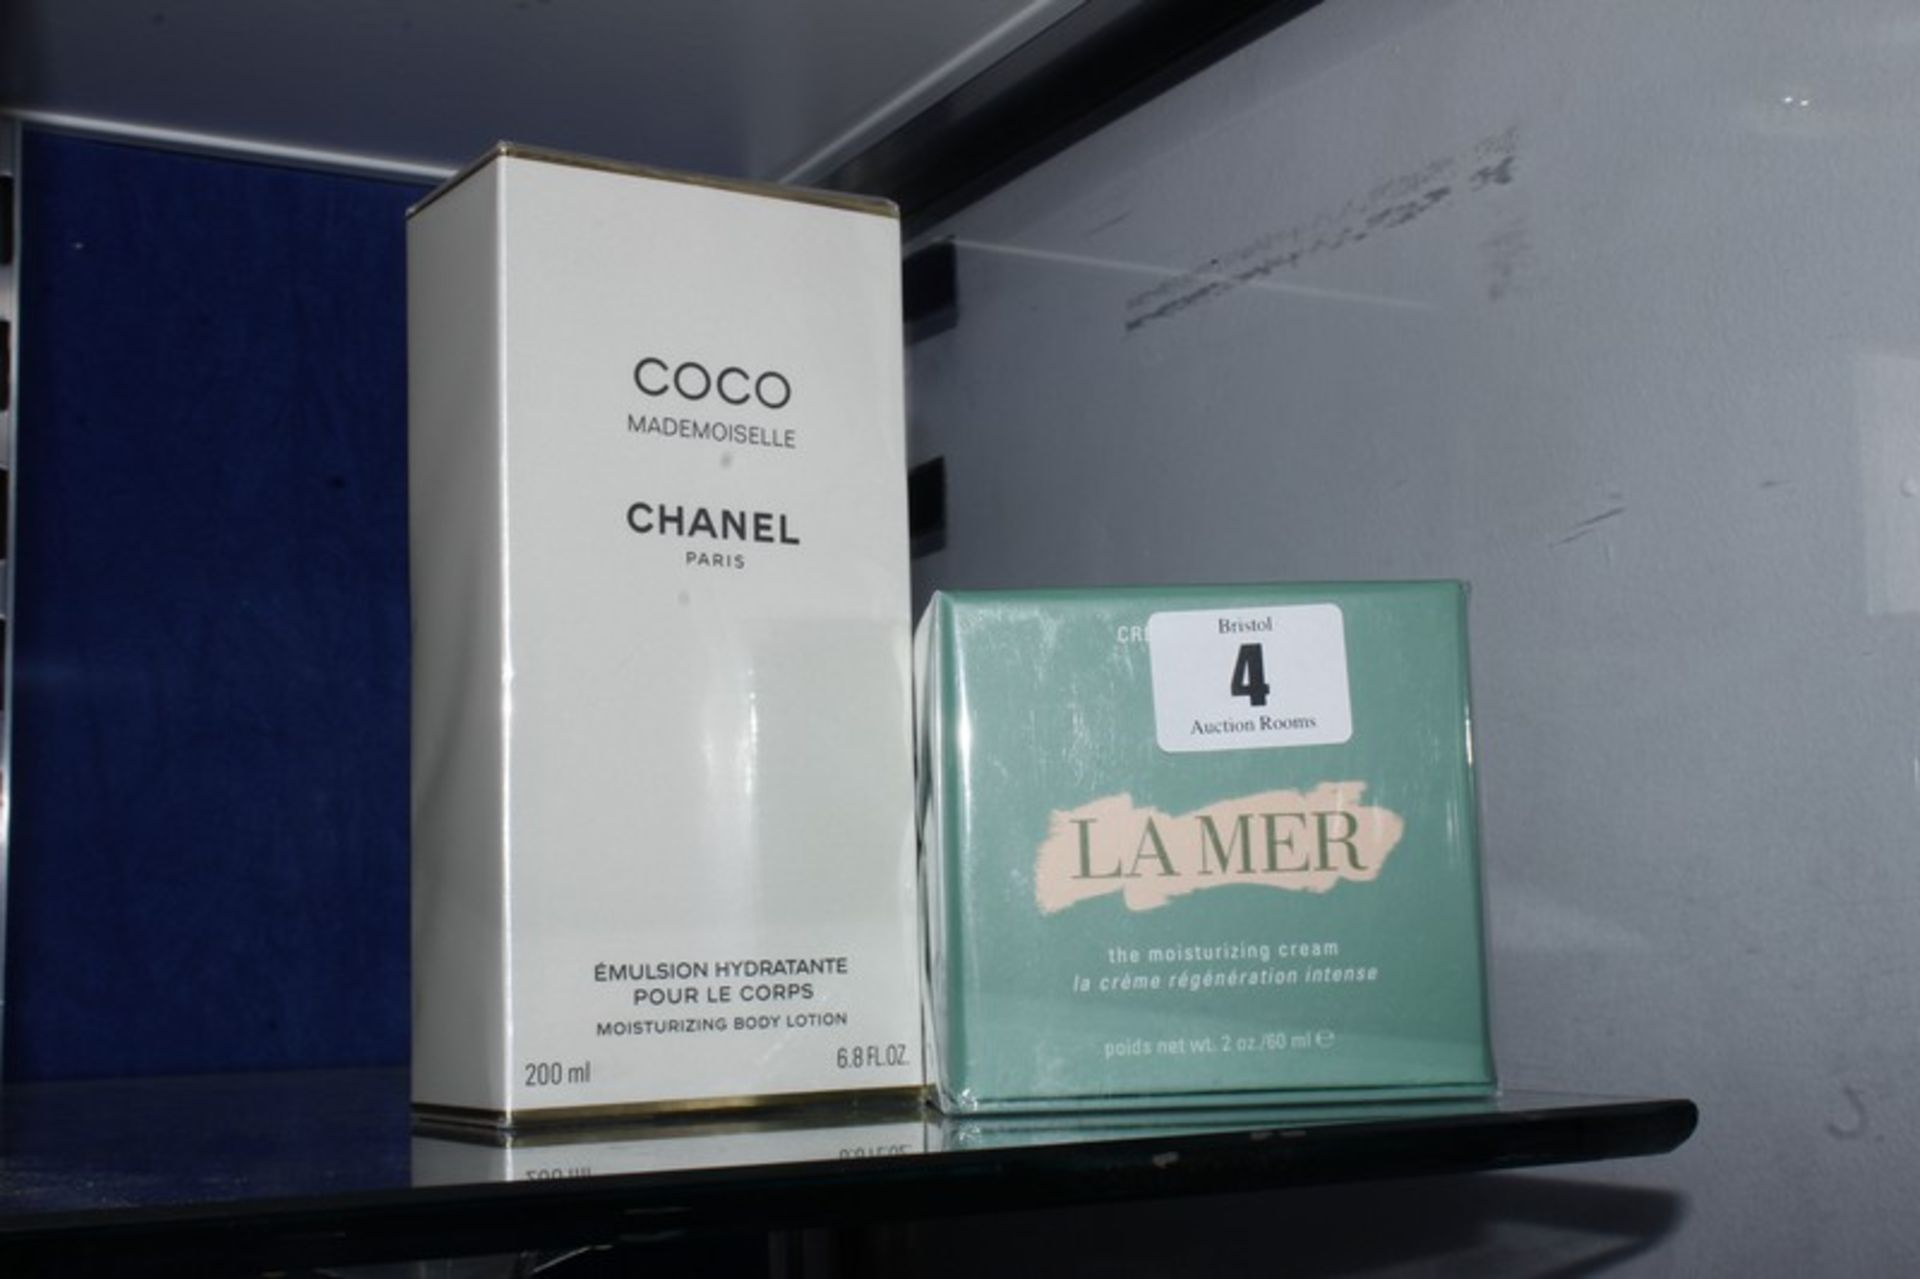 Chanel CoCo Mademoiselle moisturising body lotion (200ml), La Mer the moisturising cream (60ml).